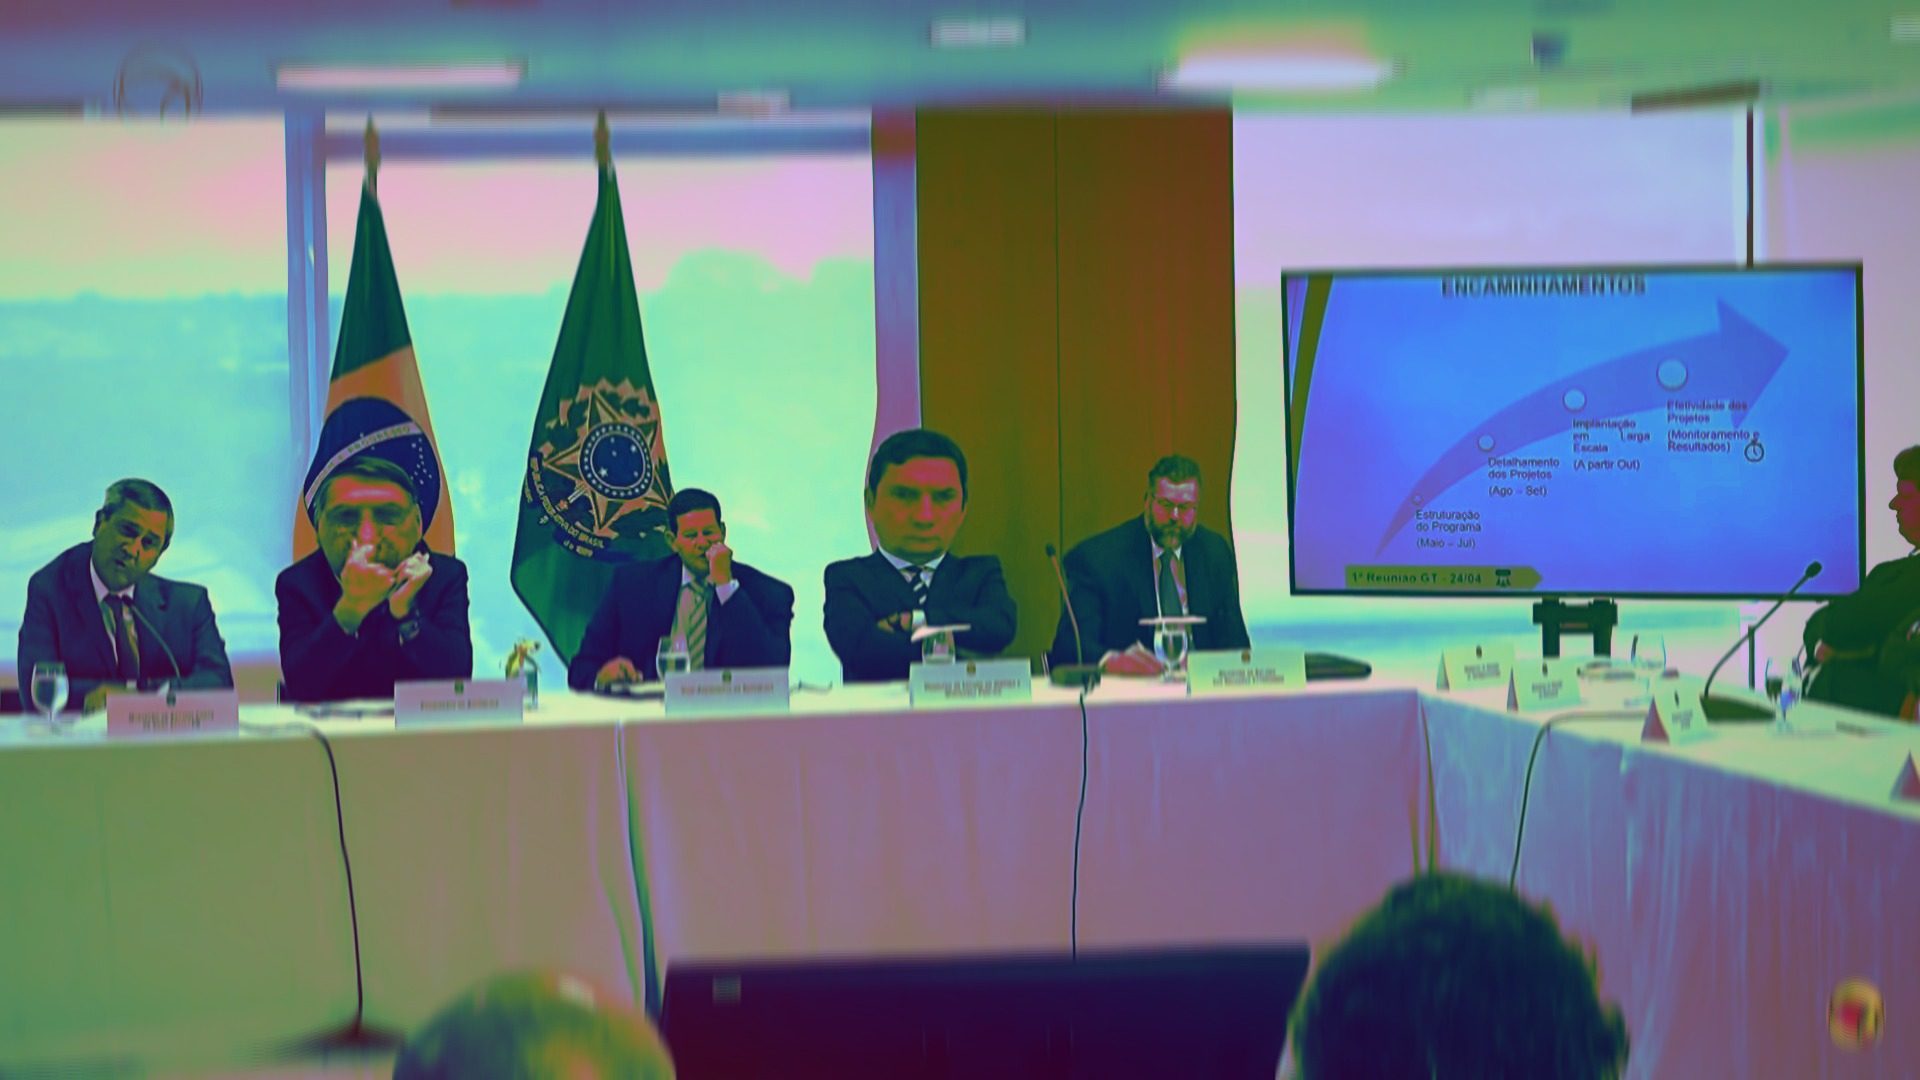 ministros e presidente bolsonaro sentados a mesa, com cores fortes e distorcidas